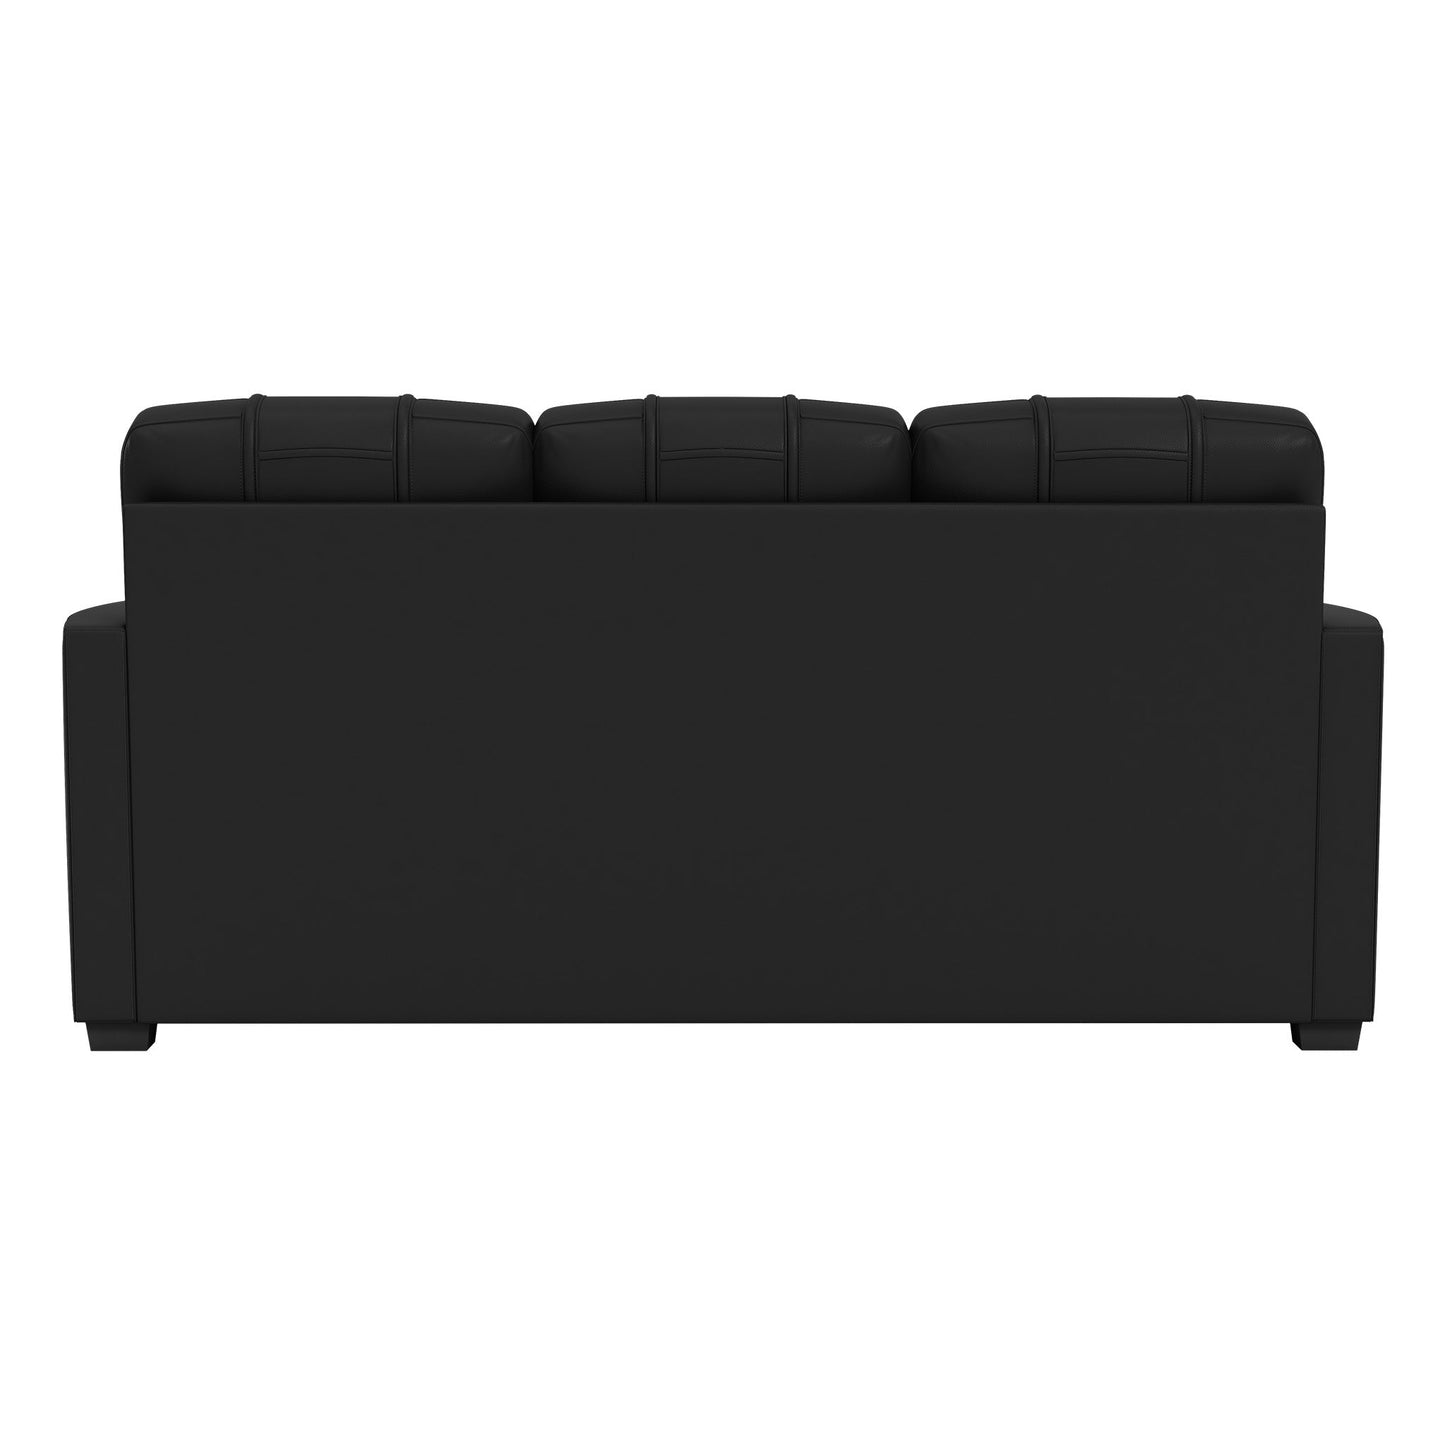 Silver Sofa with Wichita State Alternate Logo